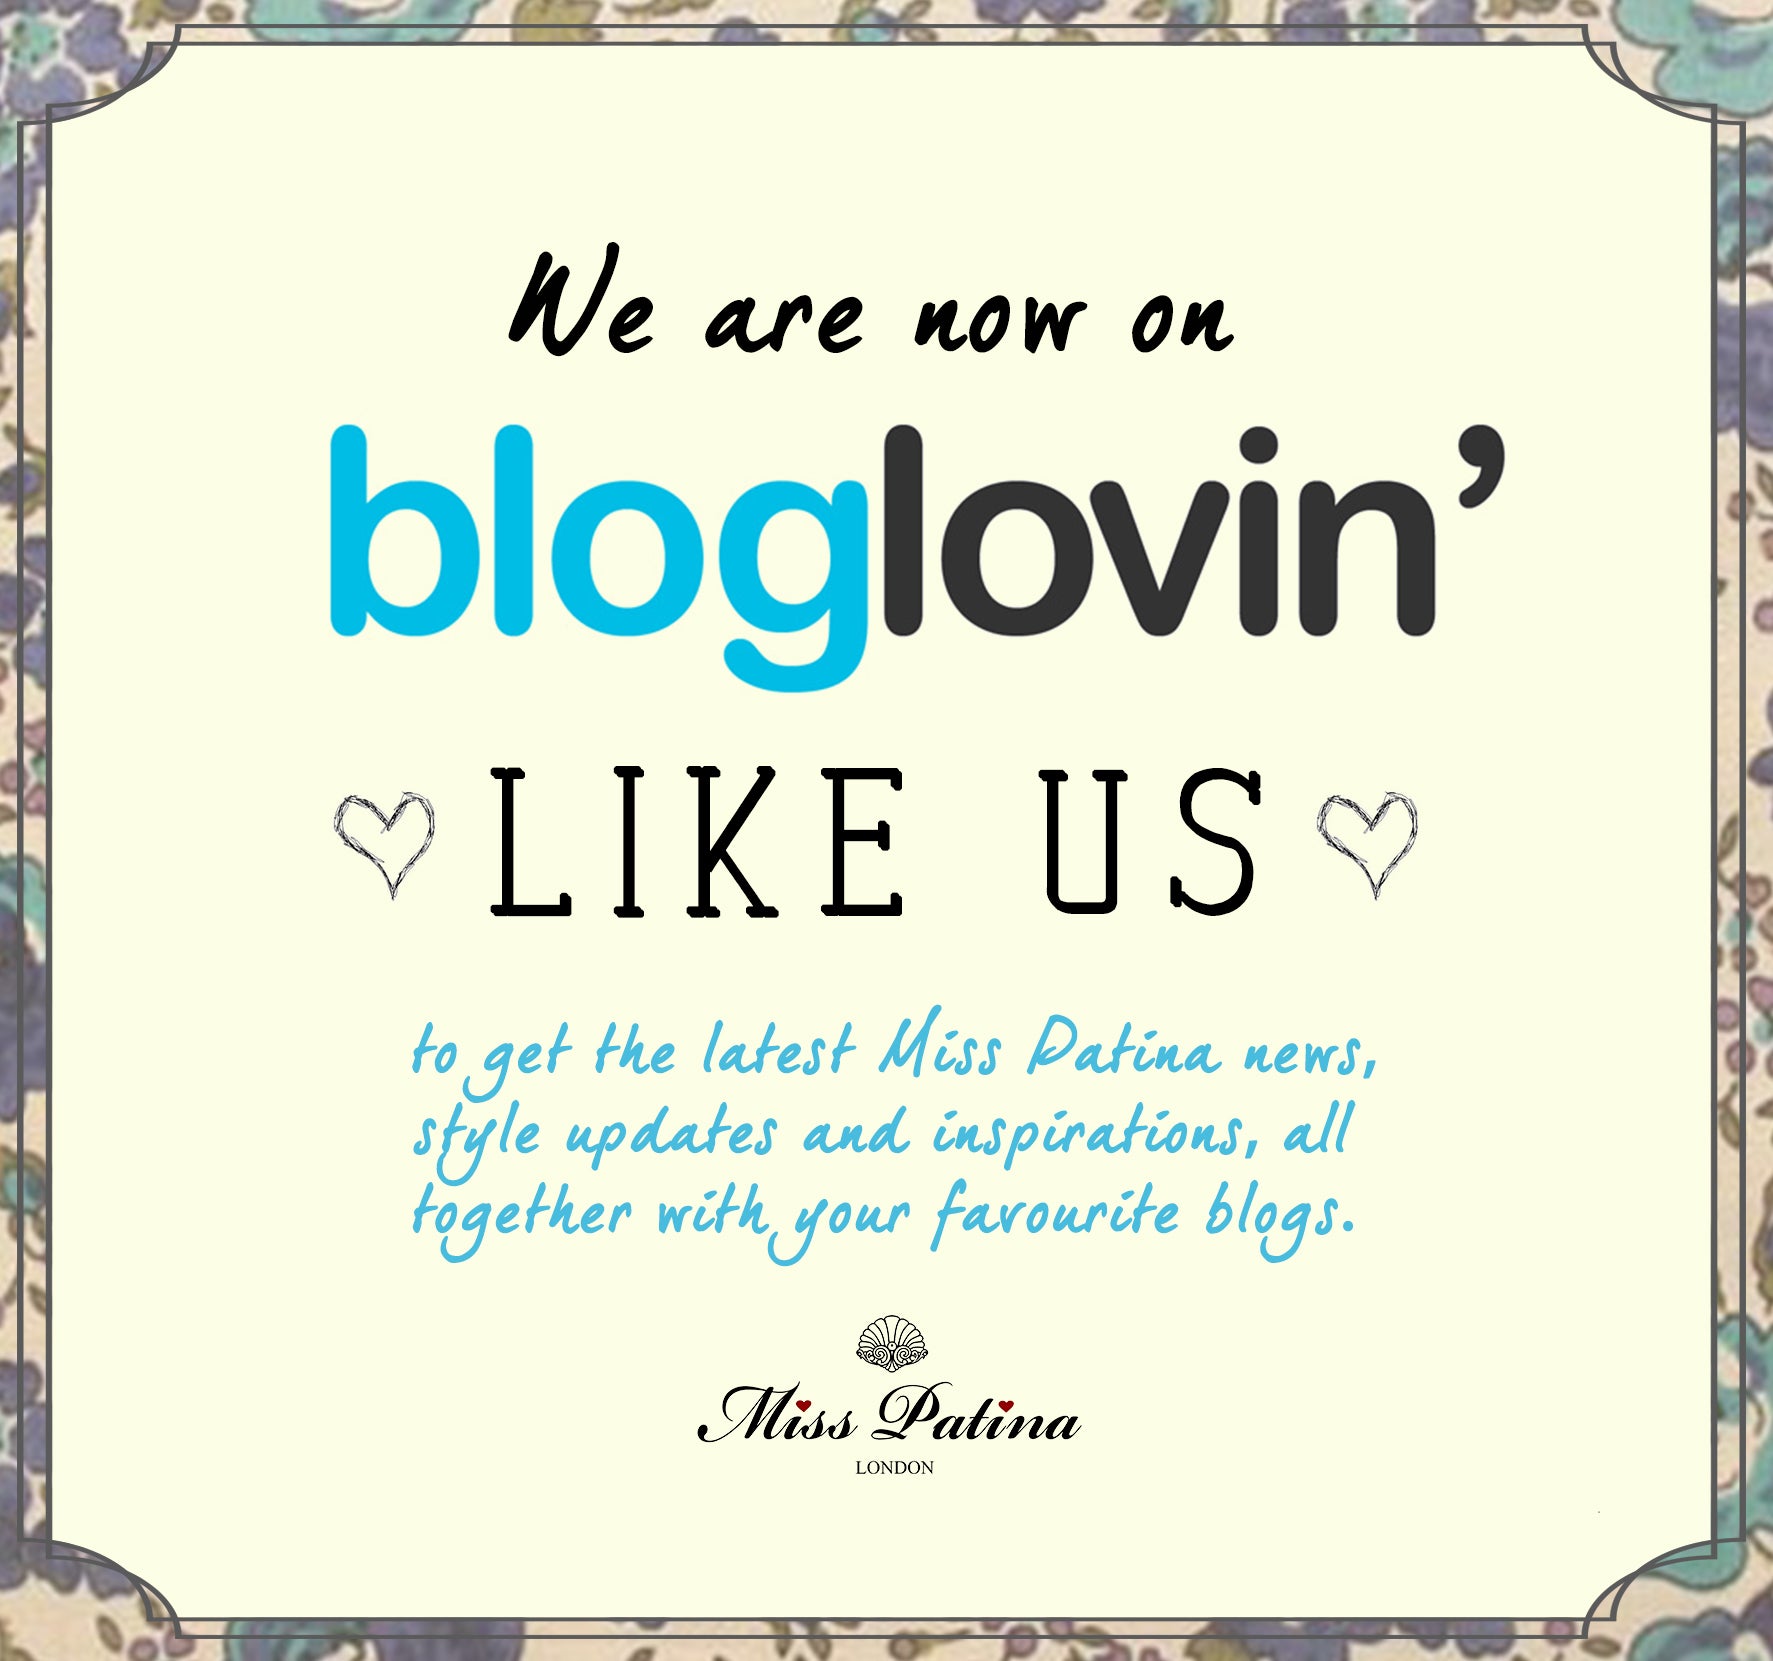 We are now on Bloglovin!